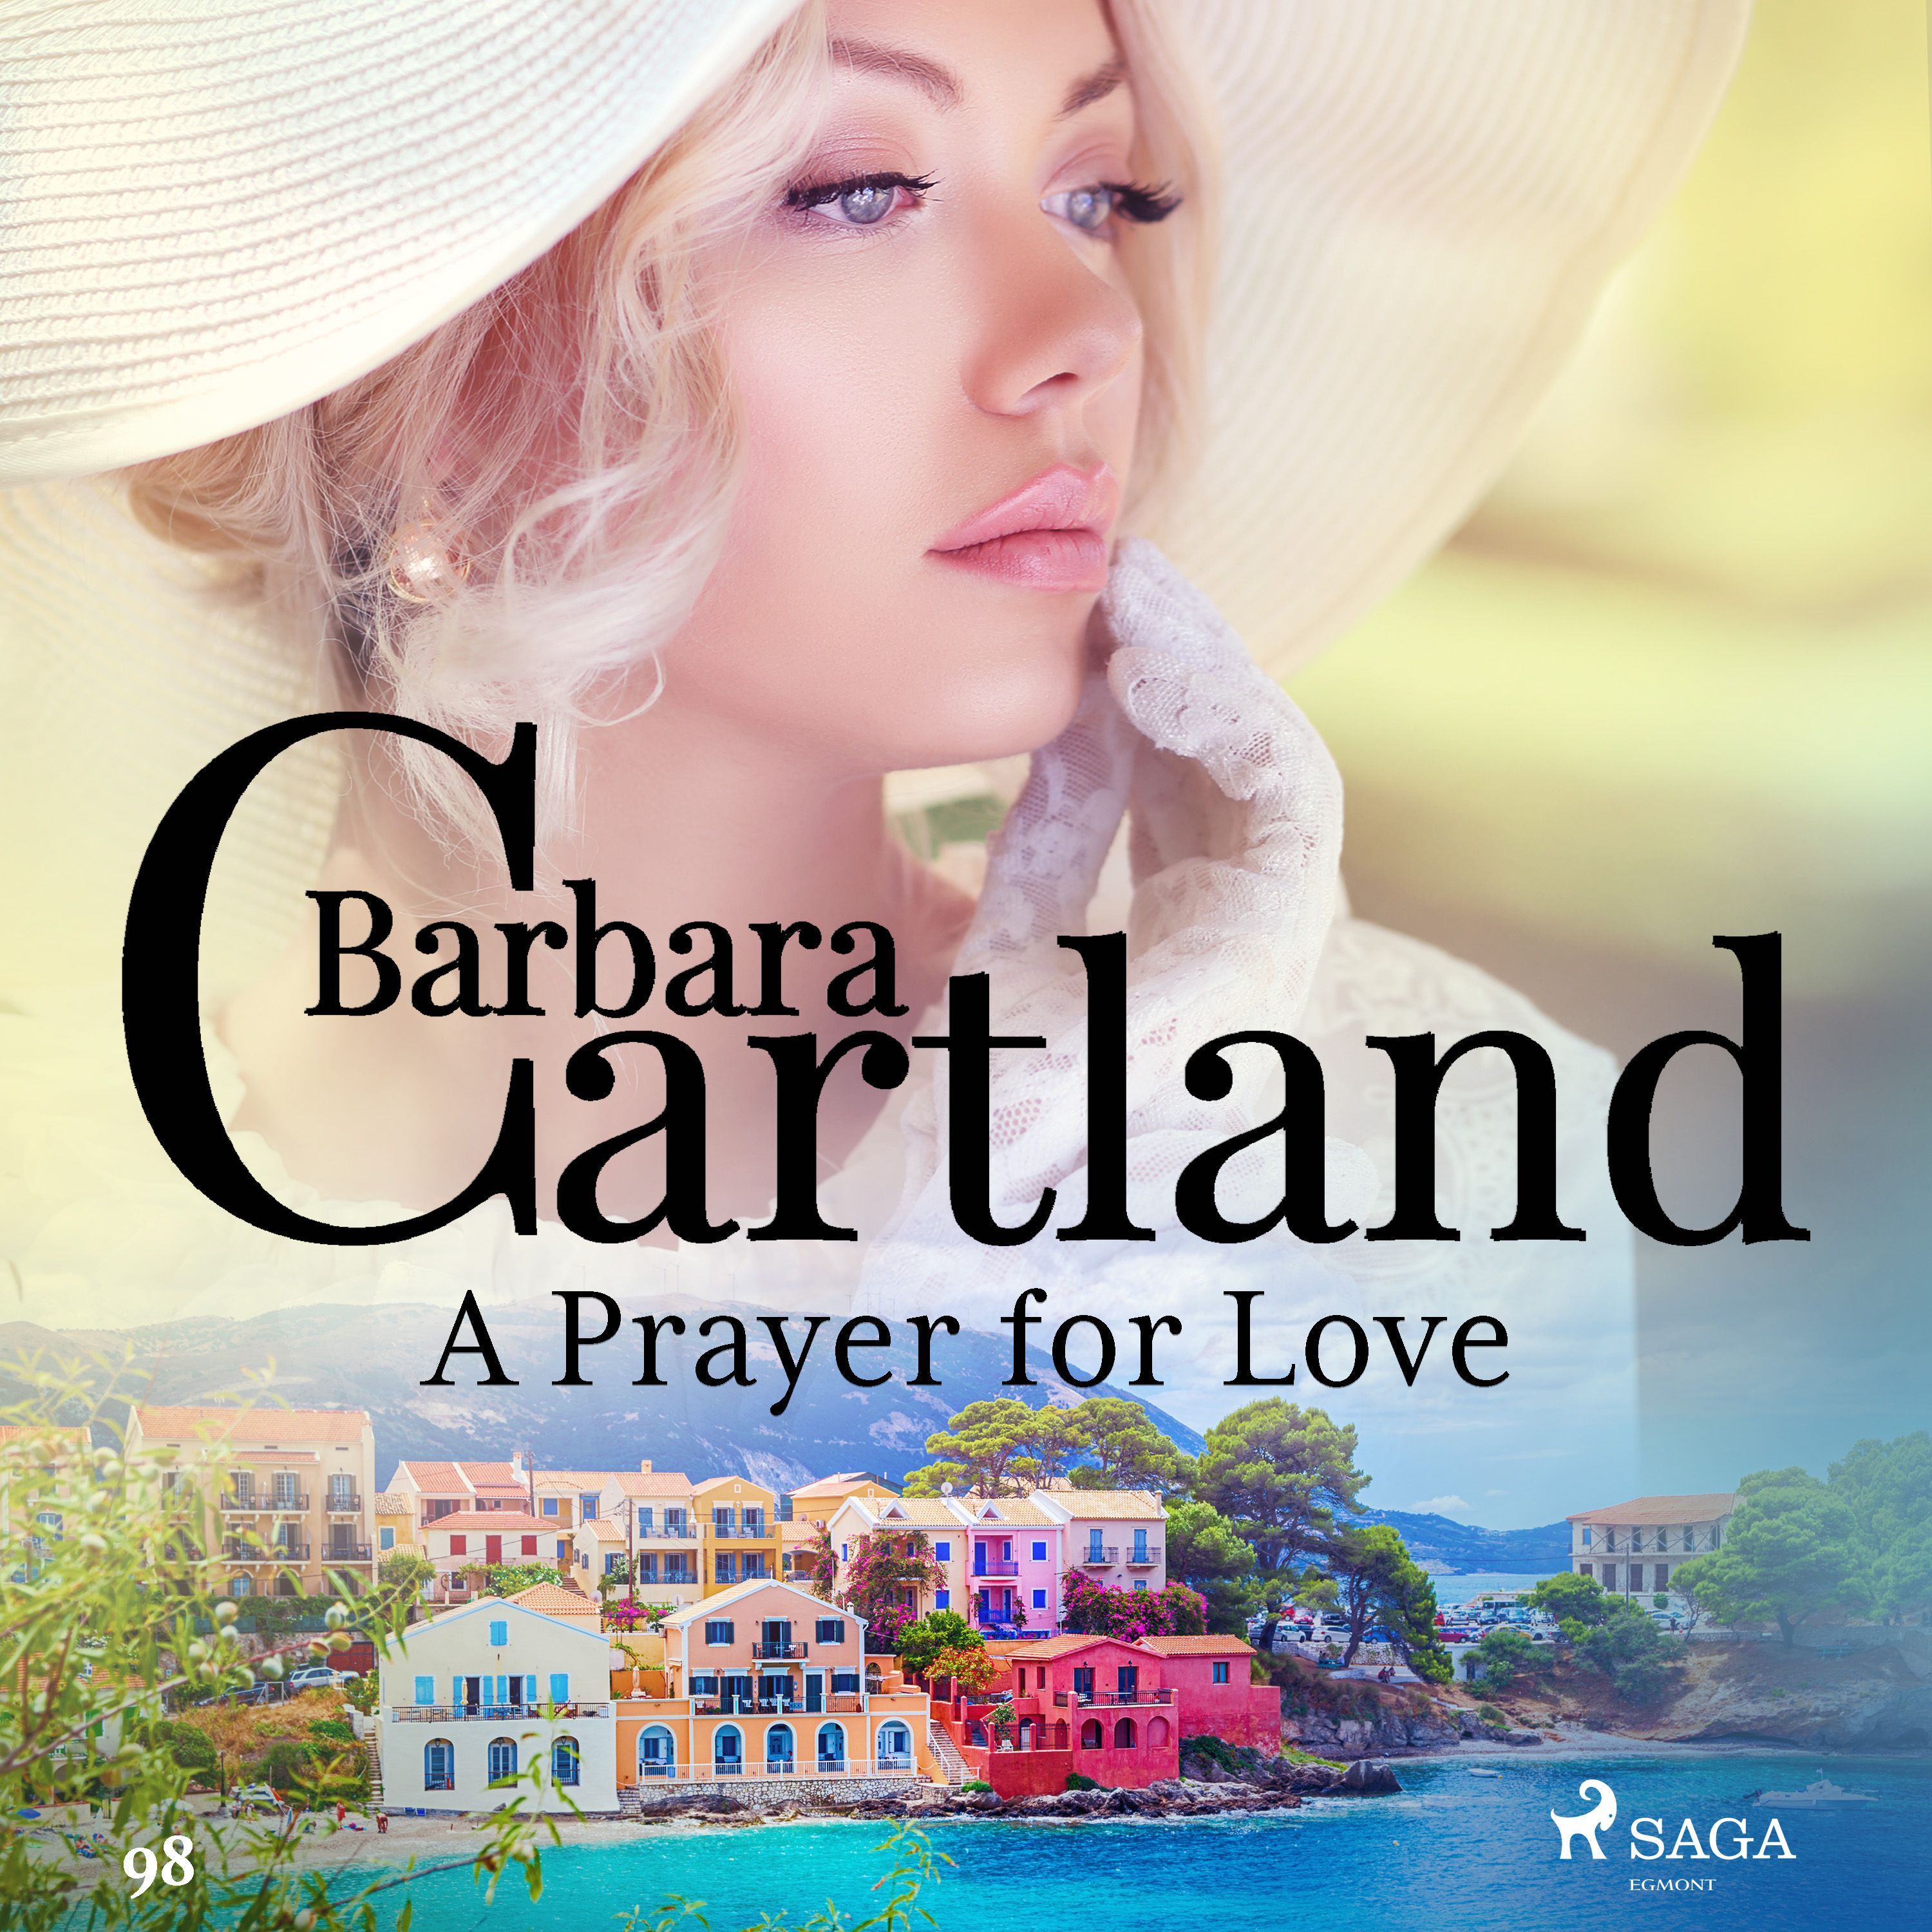 A Prayer for Love (Barbara Cartland's Pink Collection 98), audiobook by Barbara Cartland